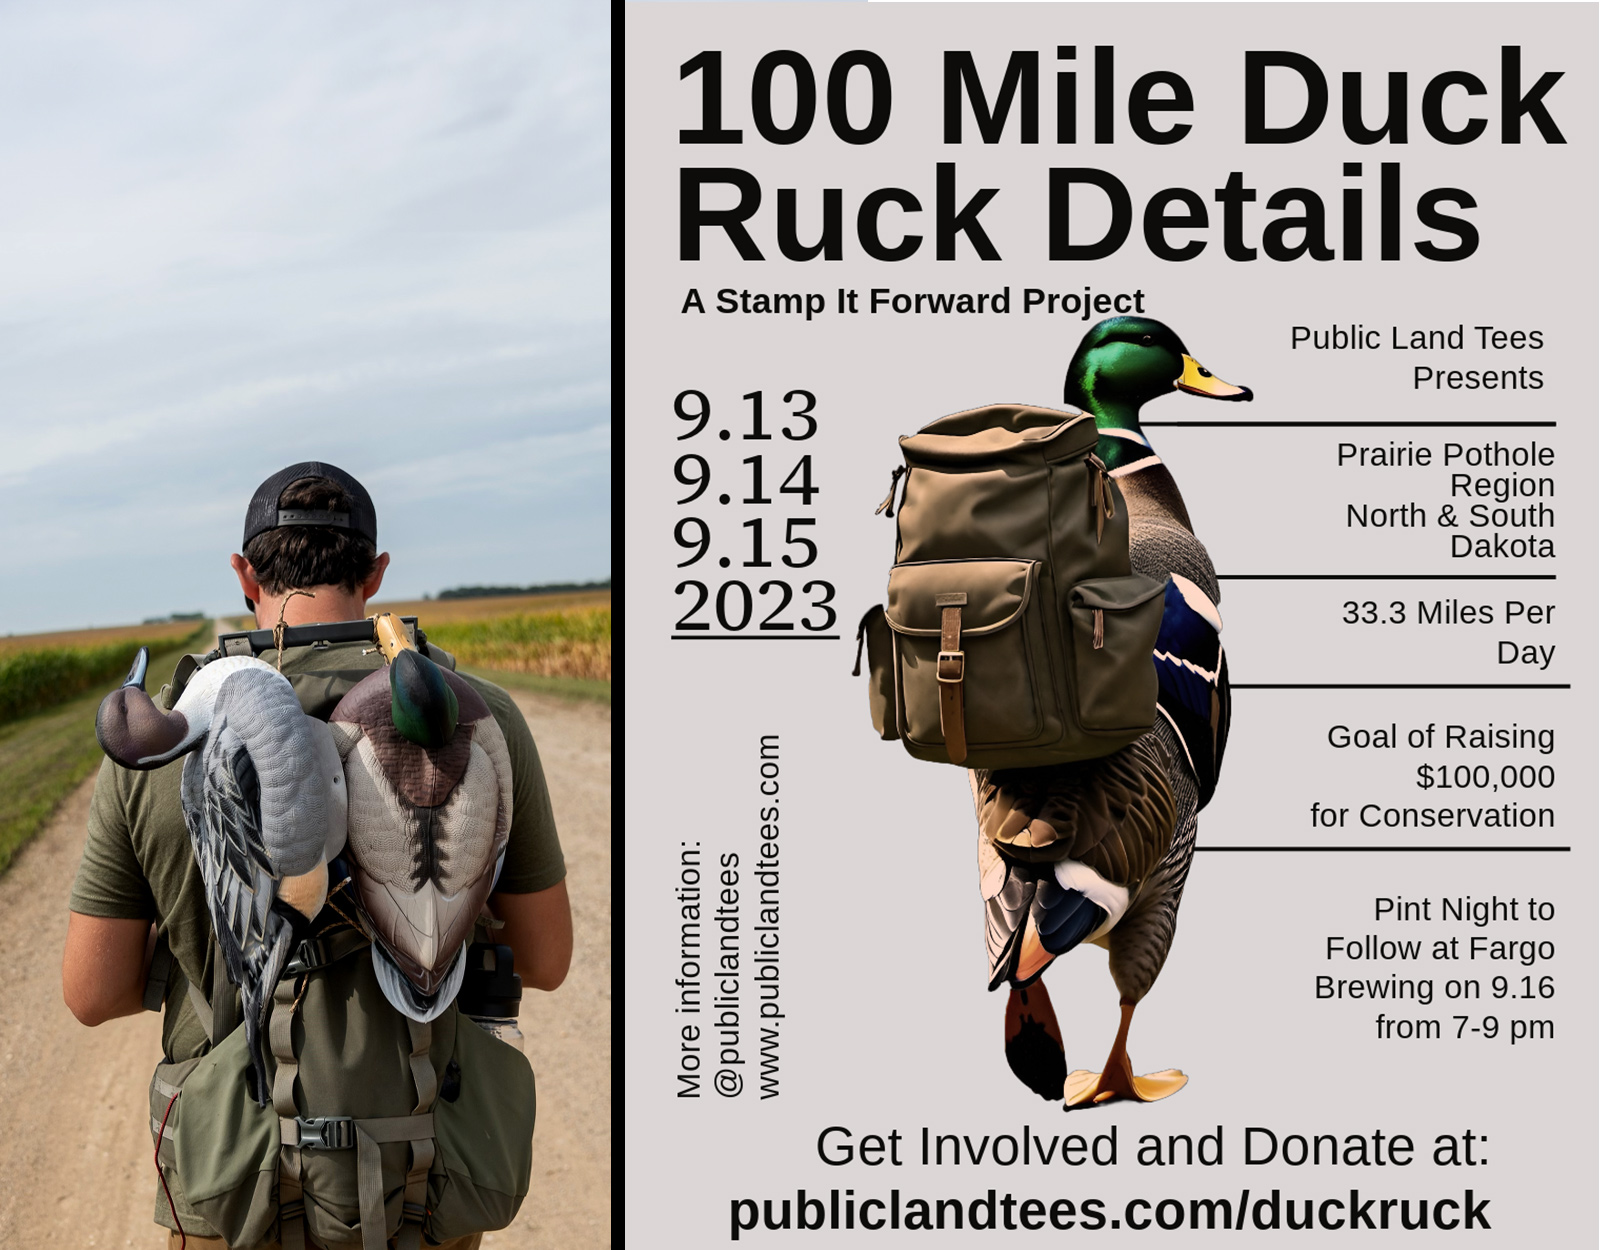 Duck ruck details.